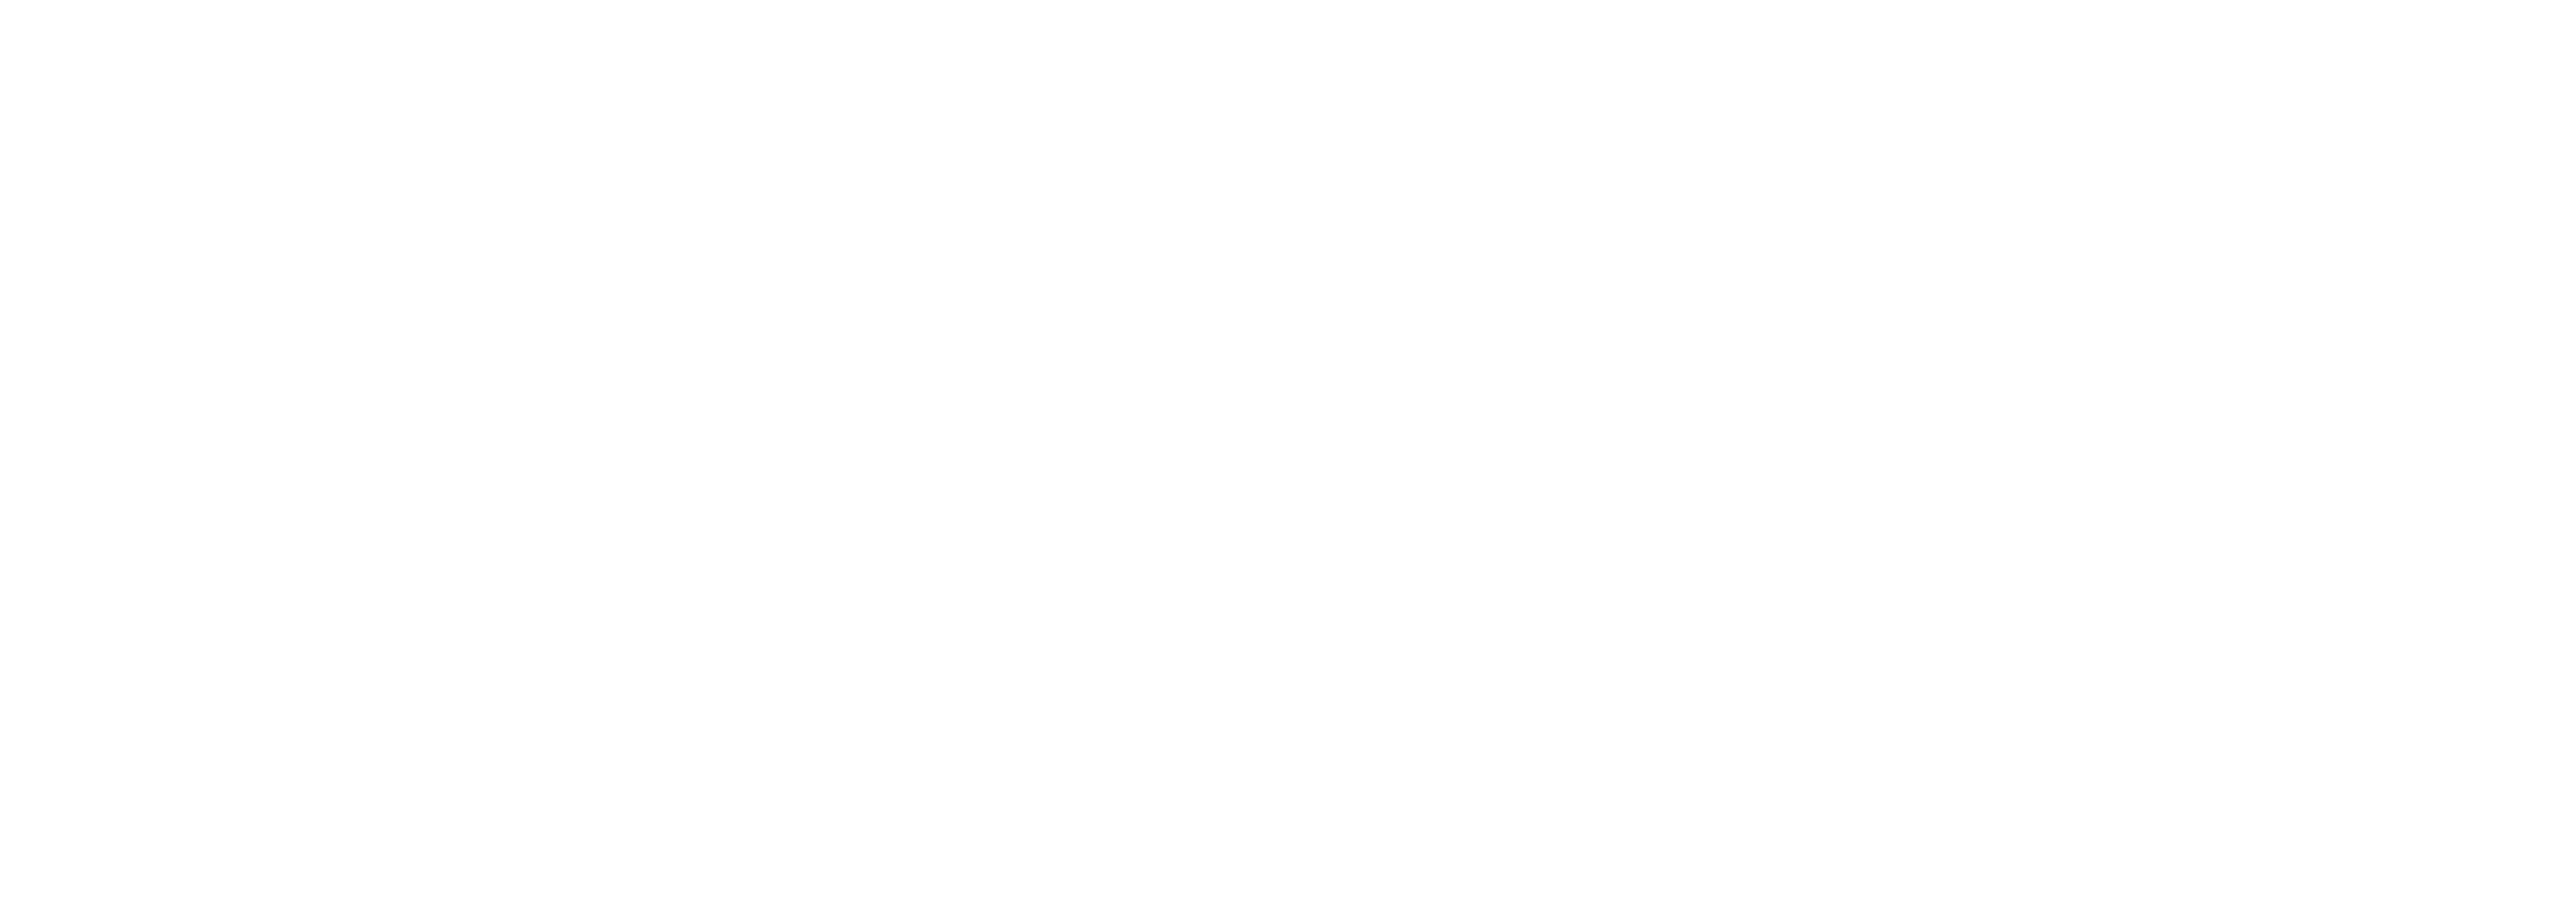 Aerospace Technology Institute